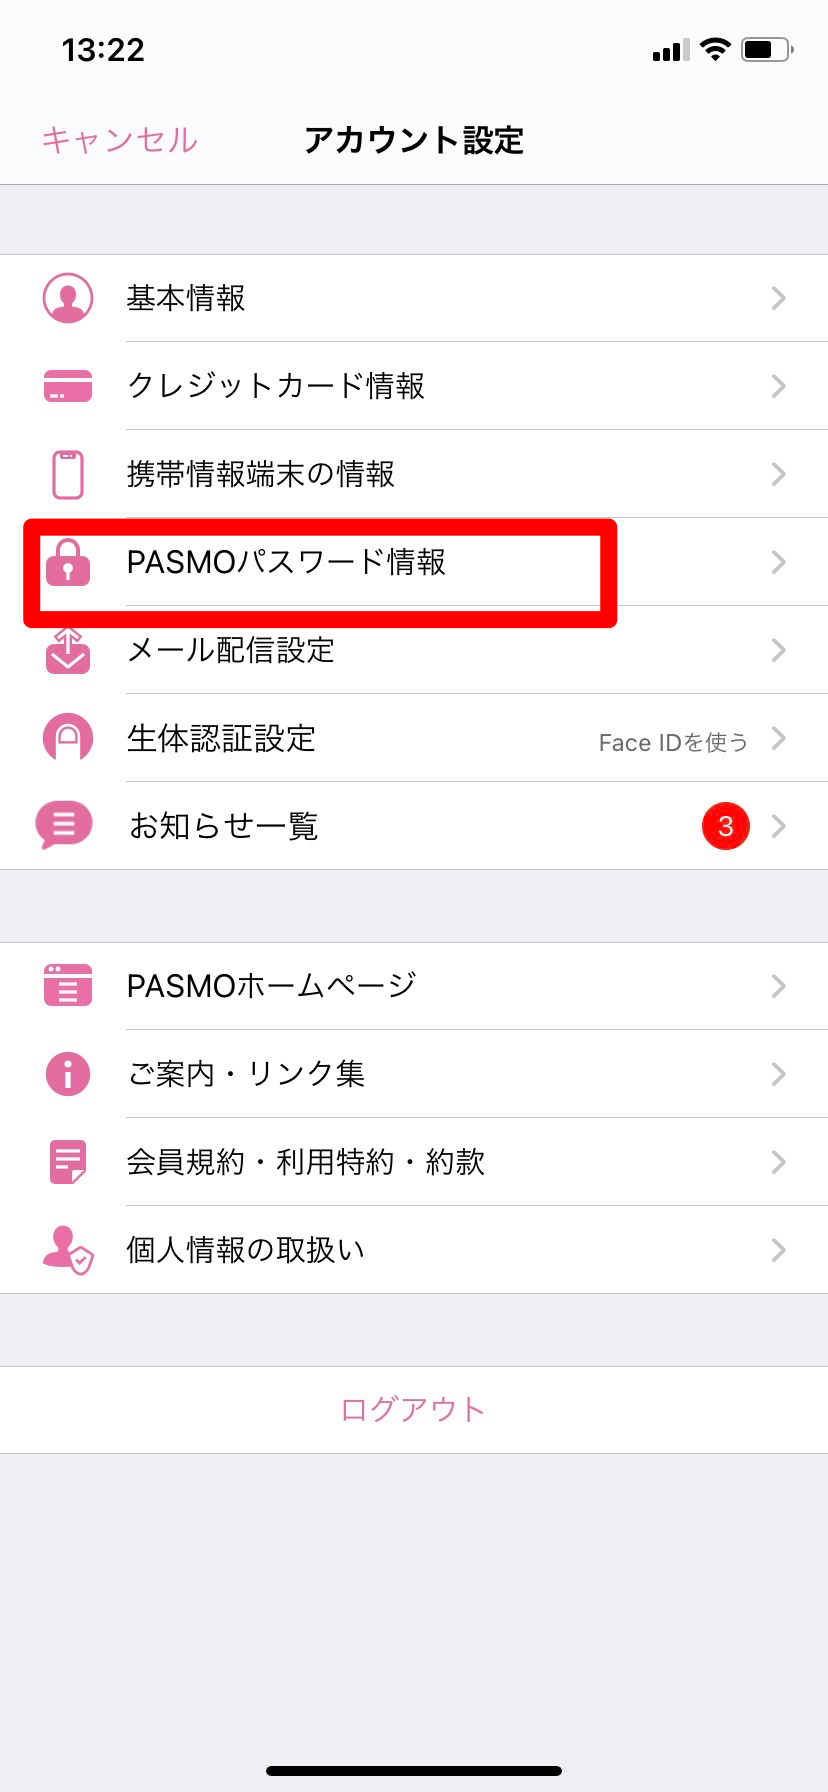 PASMOパスワード情報